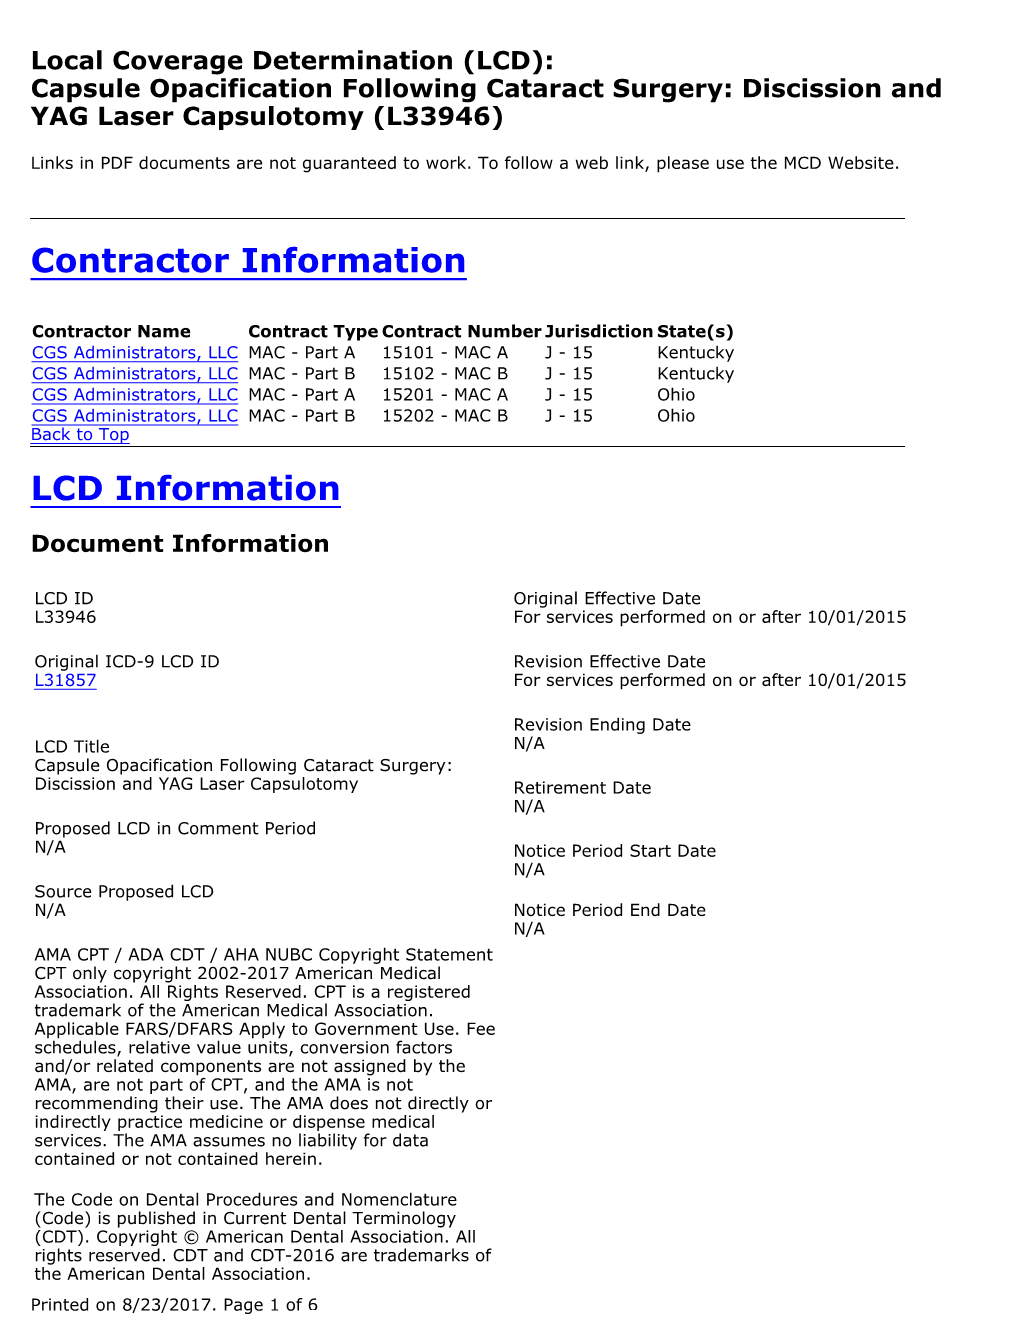 Discission and YAG Laser Capsulotomy (L33946)